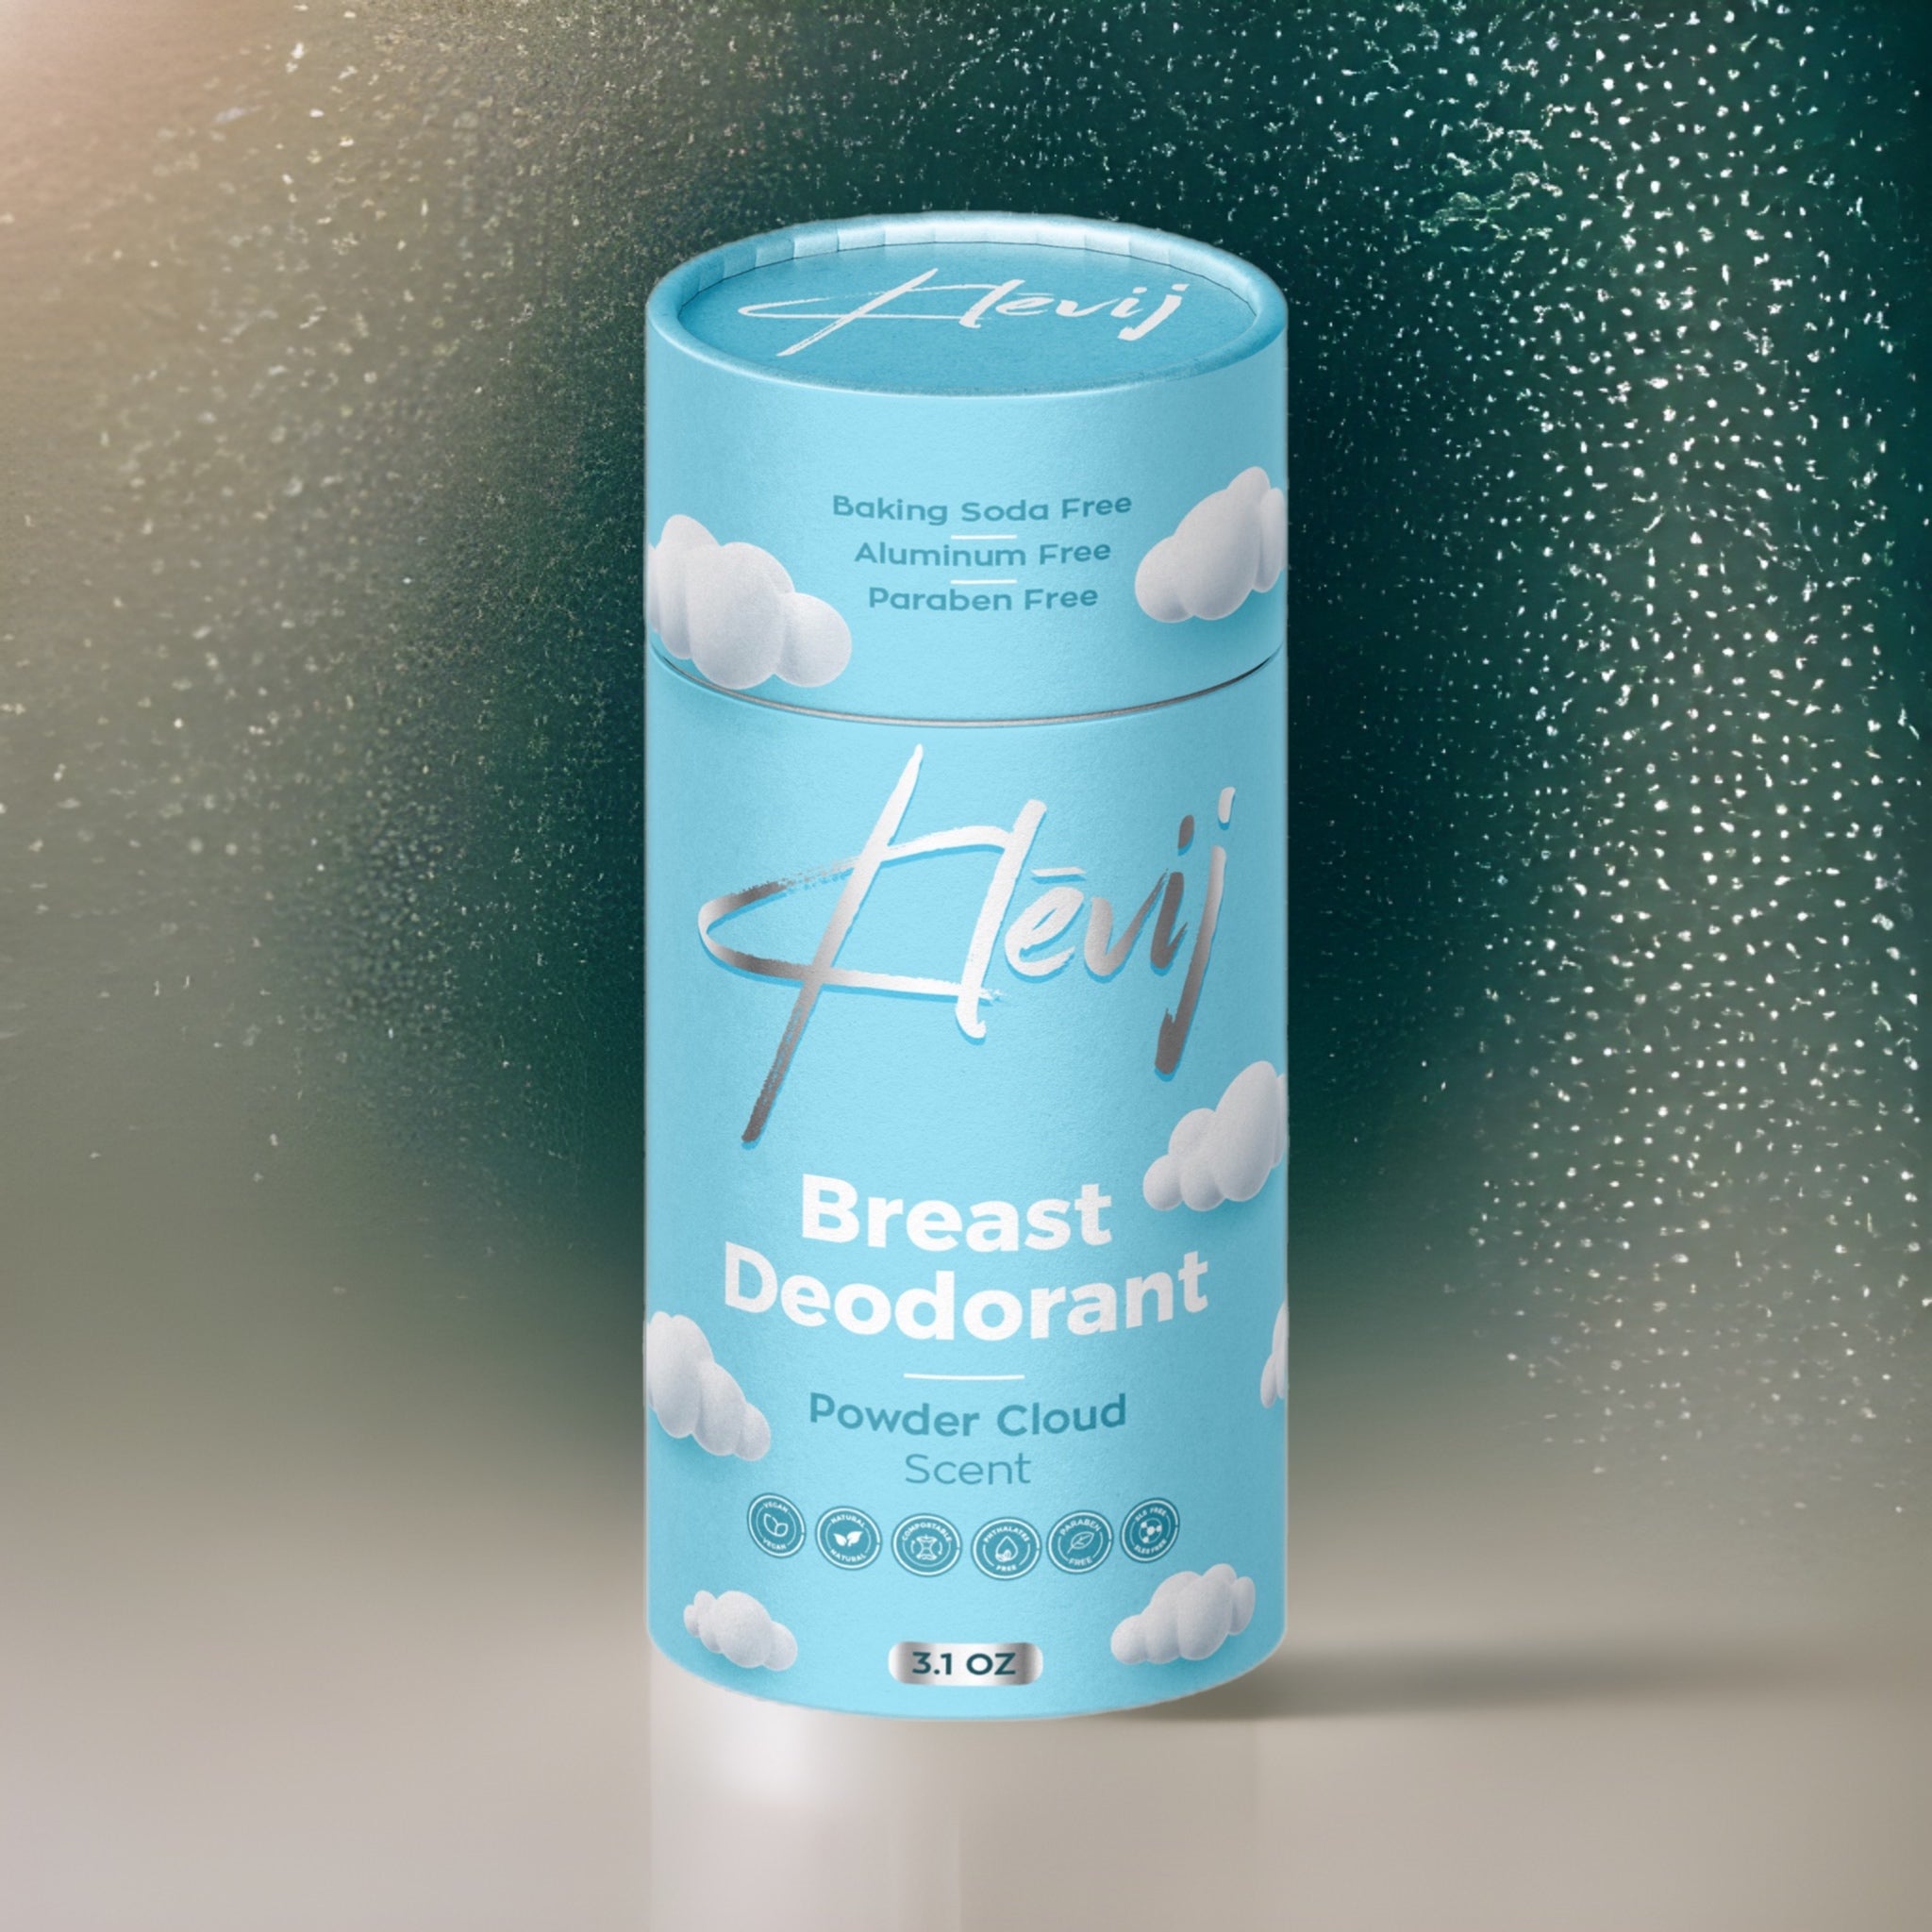 Breast Deodorant by Klevij | 3.1 oz Powder Cloud | Fresh, Chemical-Free Protection